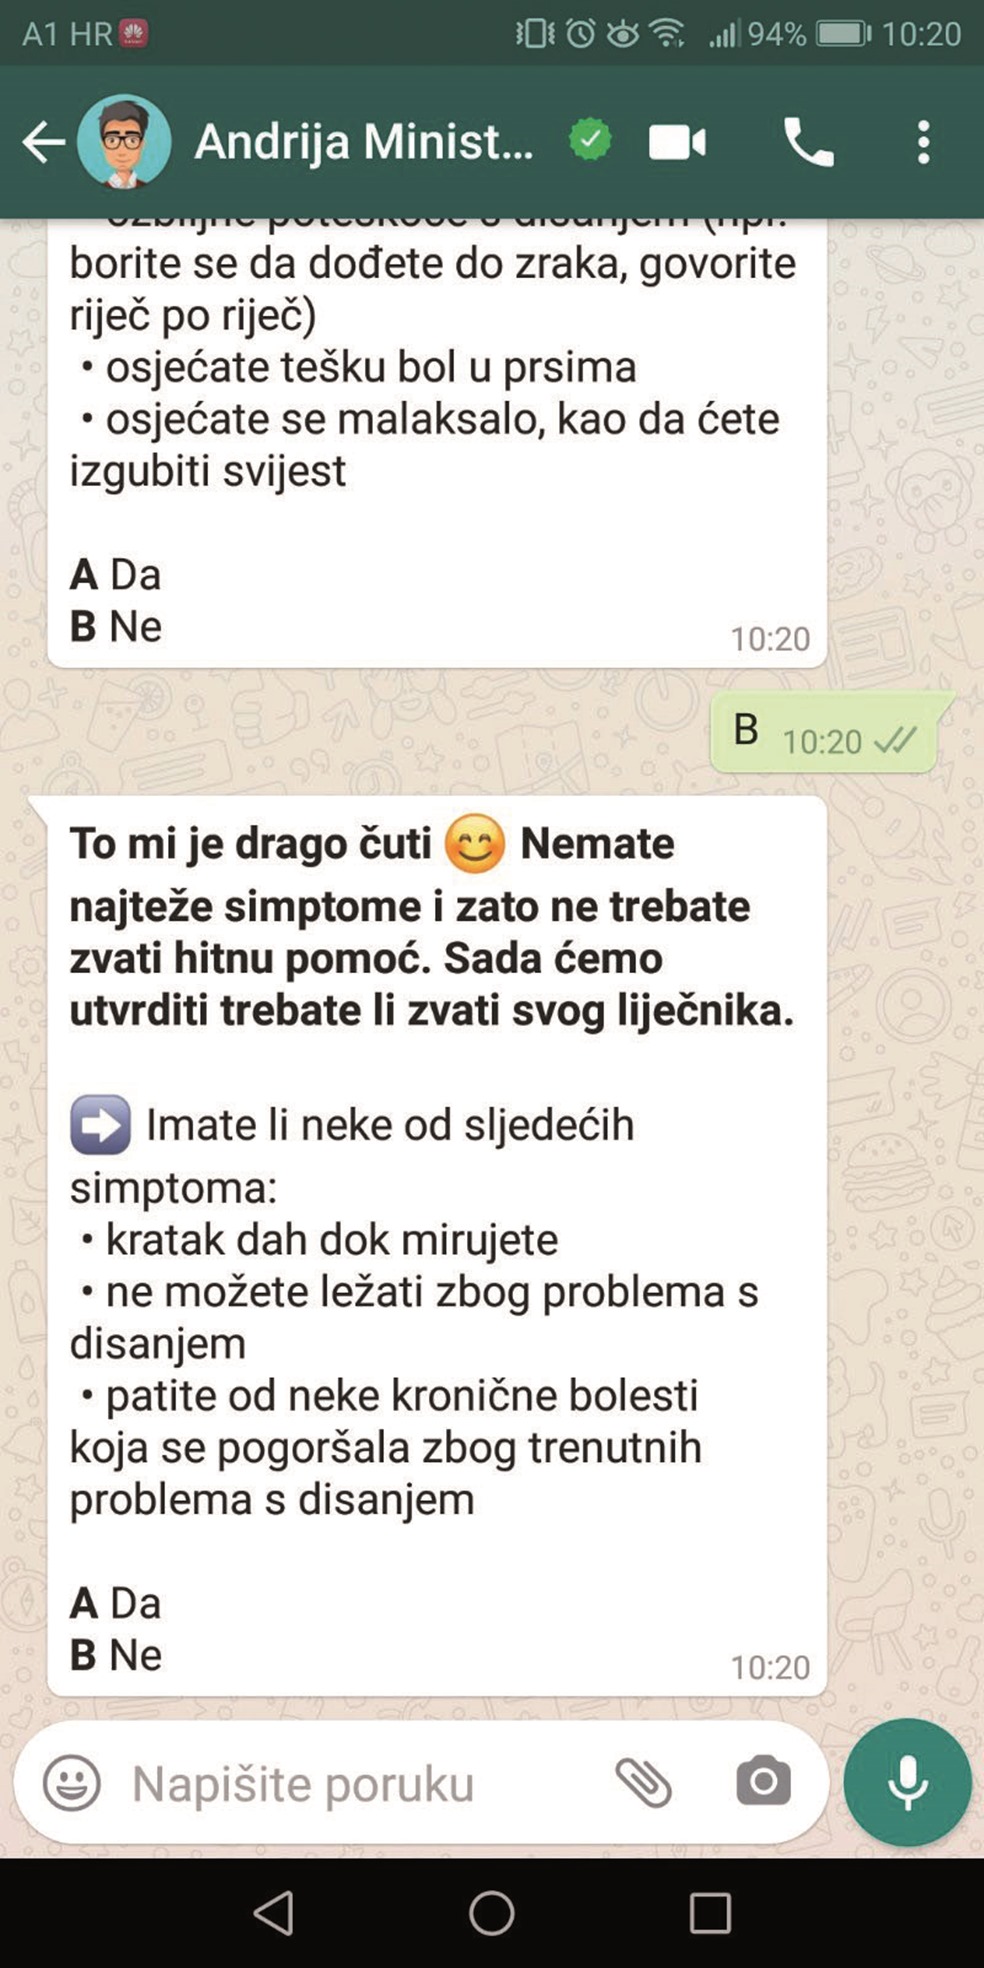 Posavska Hrvatska : Brza dijagnoza s emotikonima 